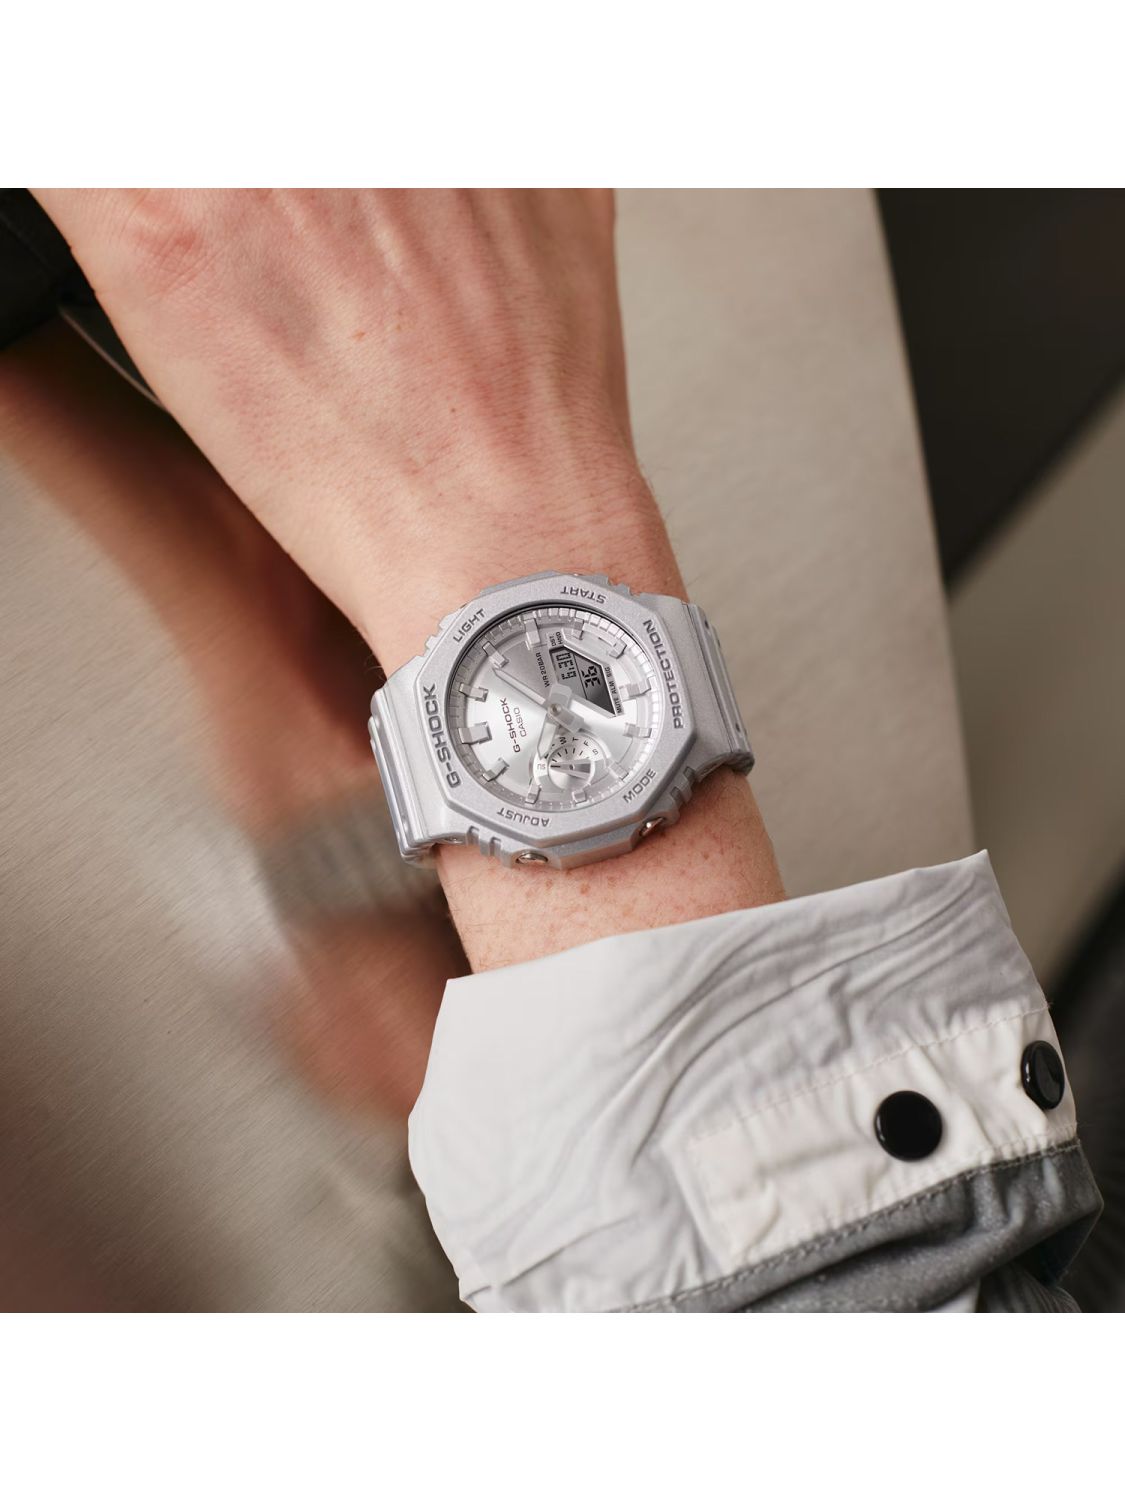 Casio G-Shock Men's Watch Forgotten Future Silver Tone GA-2100FF-8AER •  uhrcenter